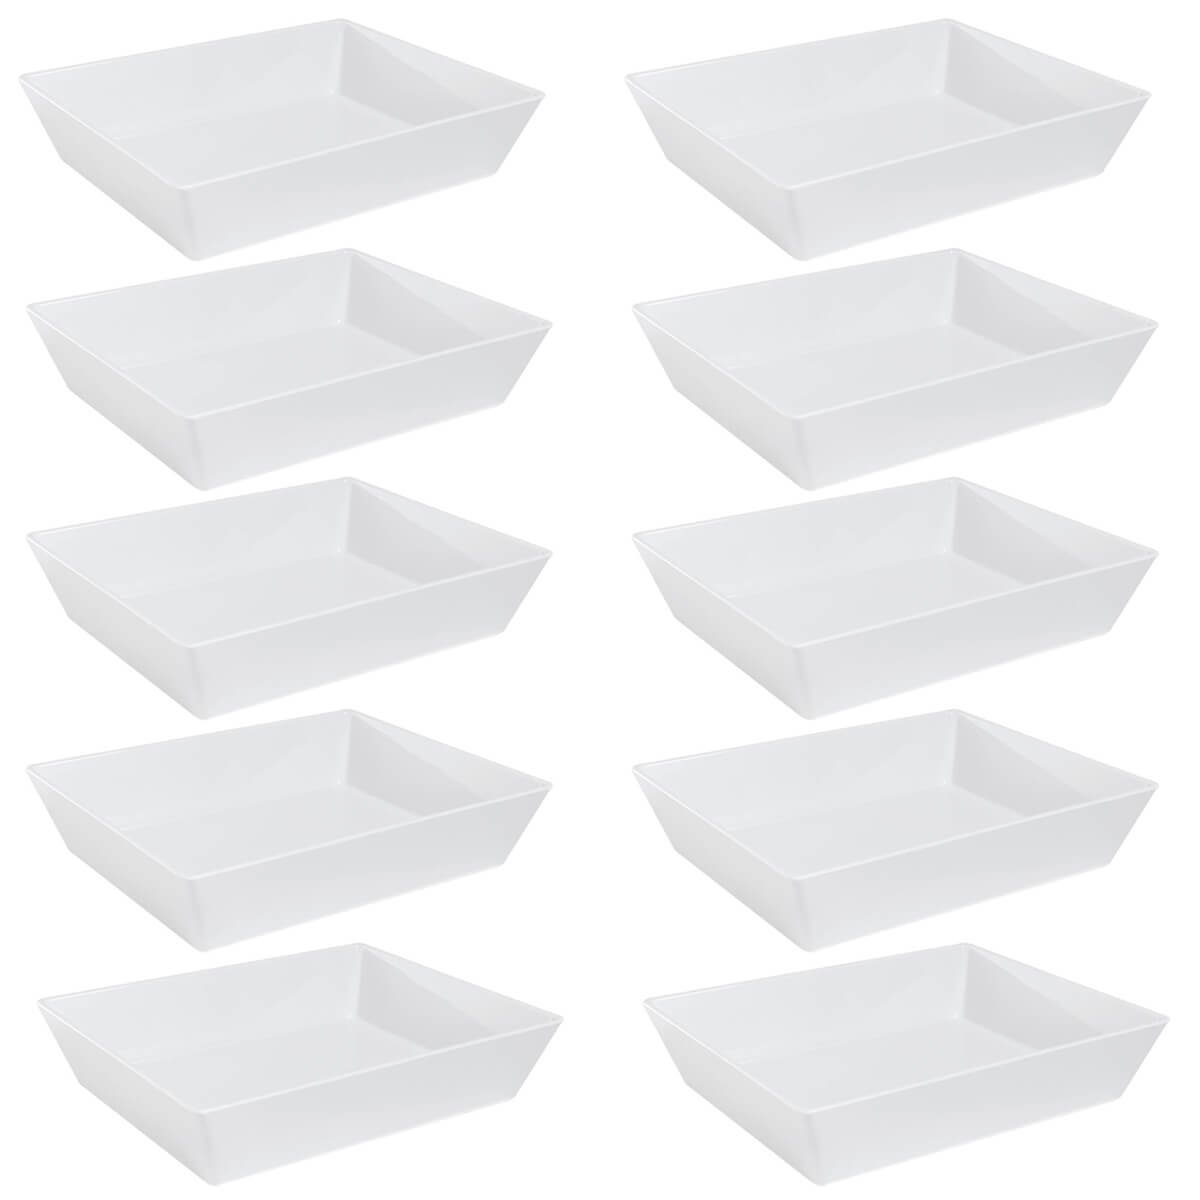 Kit 10 Travessas 4,8l Retangulares Brancas para Servir a Mesa Bandeja Salada Sobremesa Coza